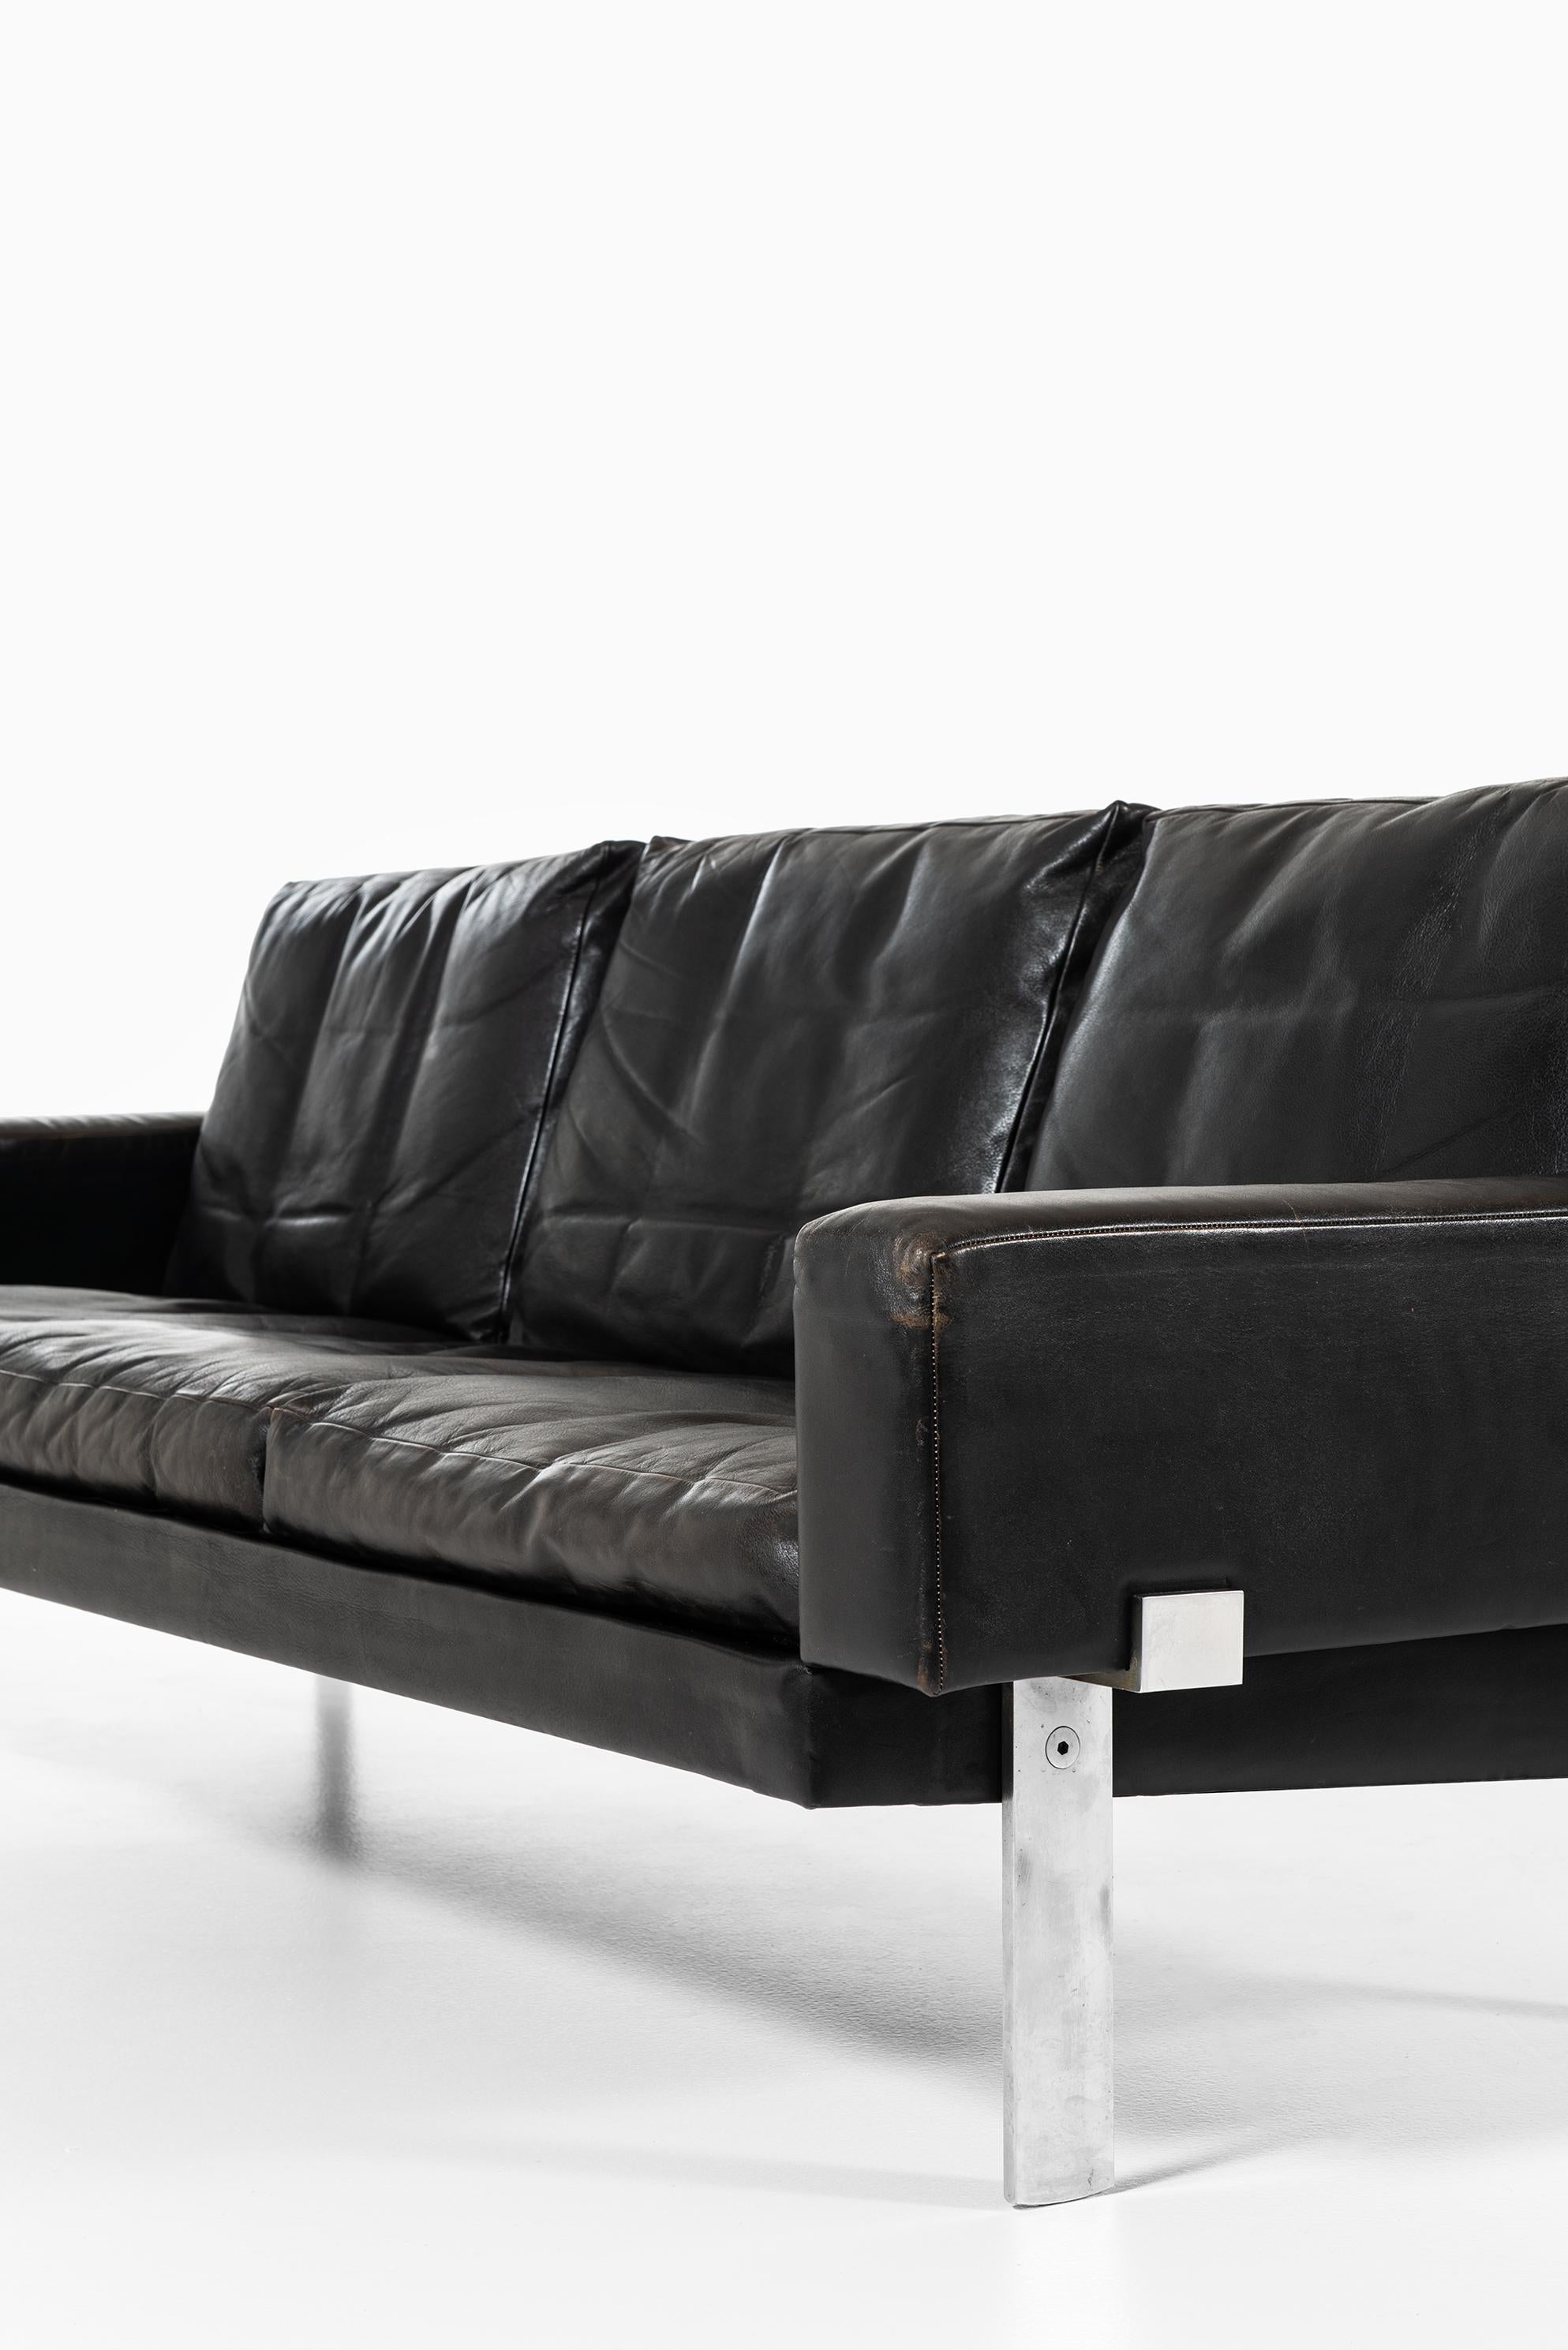 Scandinavian Modern Illum Wikkelsø Sofa Produced by Michael Laursen in Denmark For Sale